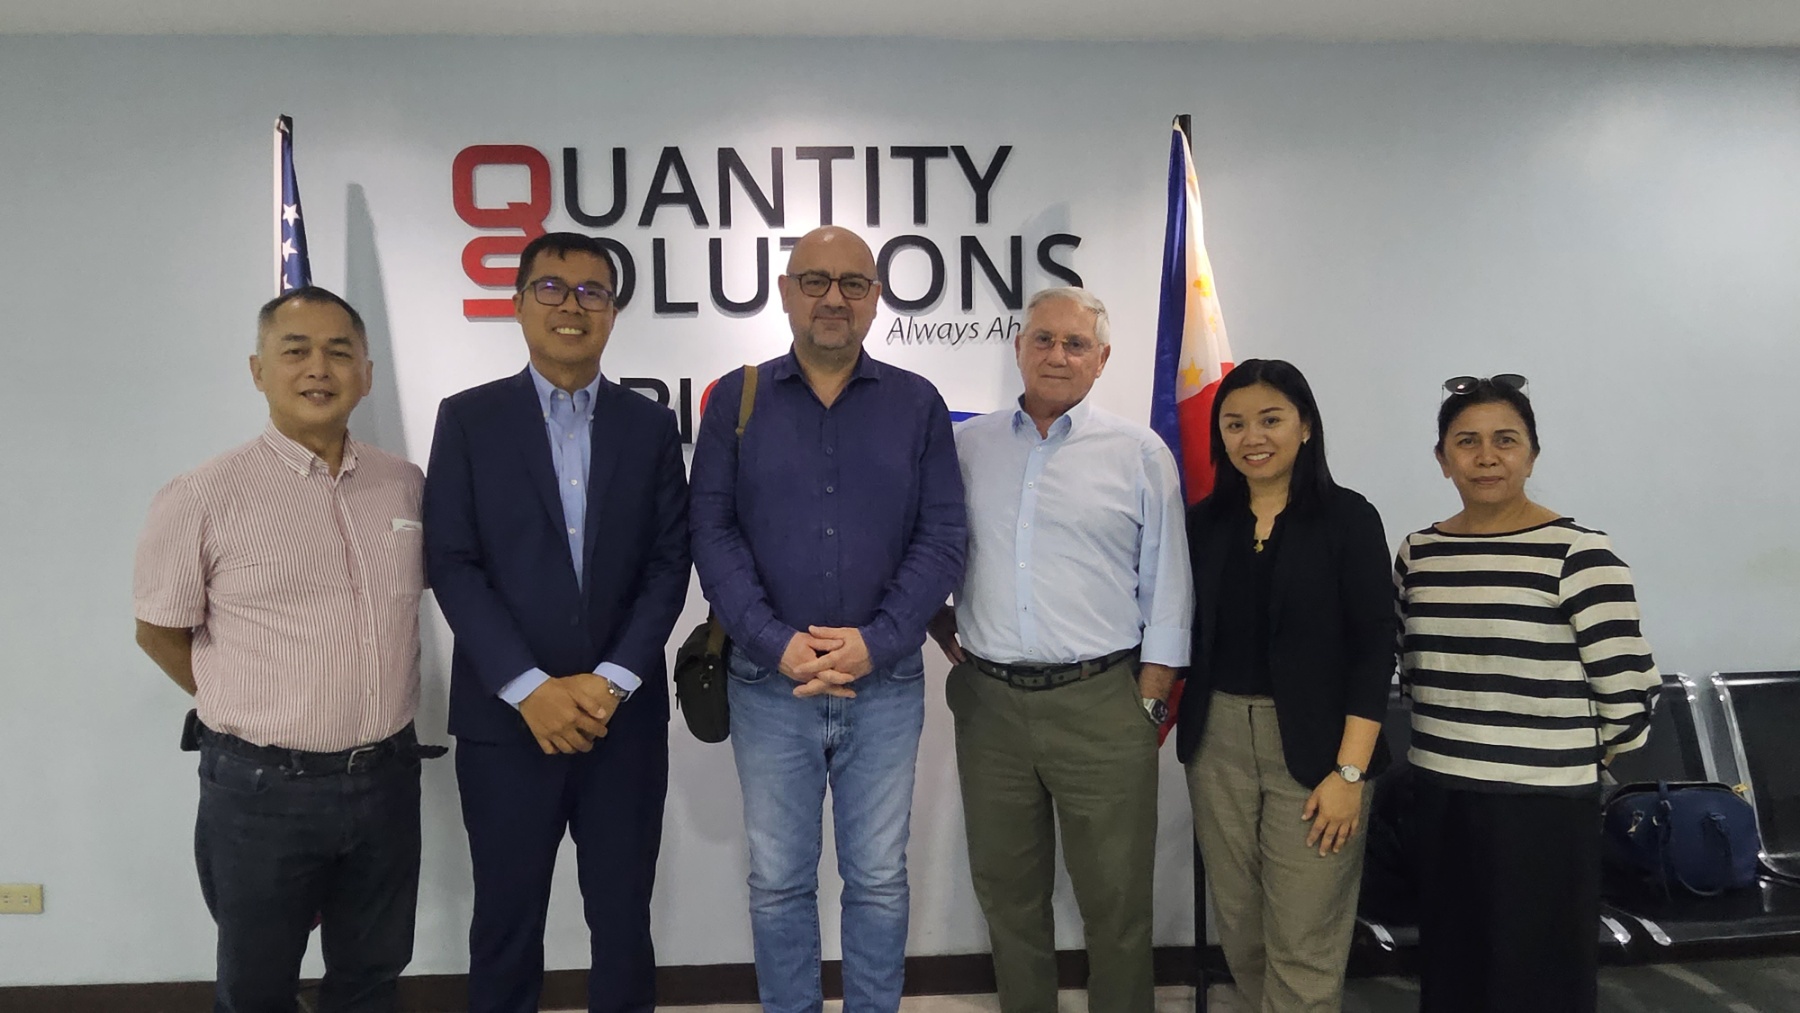 Mac International, Saudi Arabia, visited Quantity Solutions Inc. Office